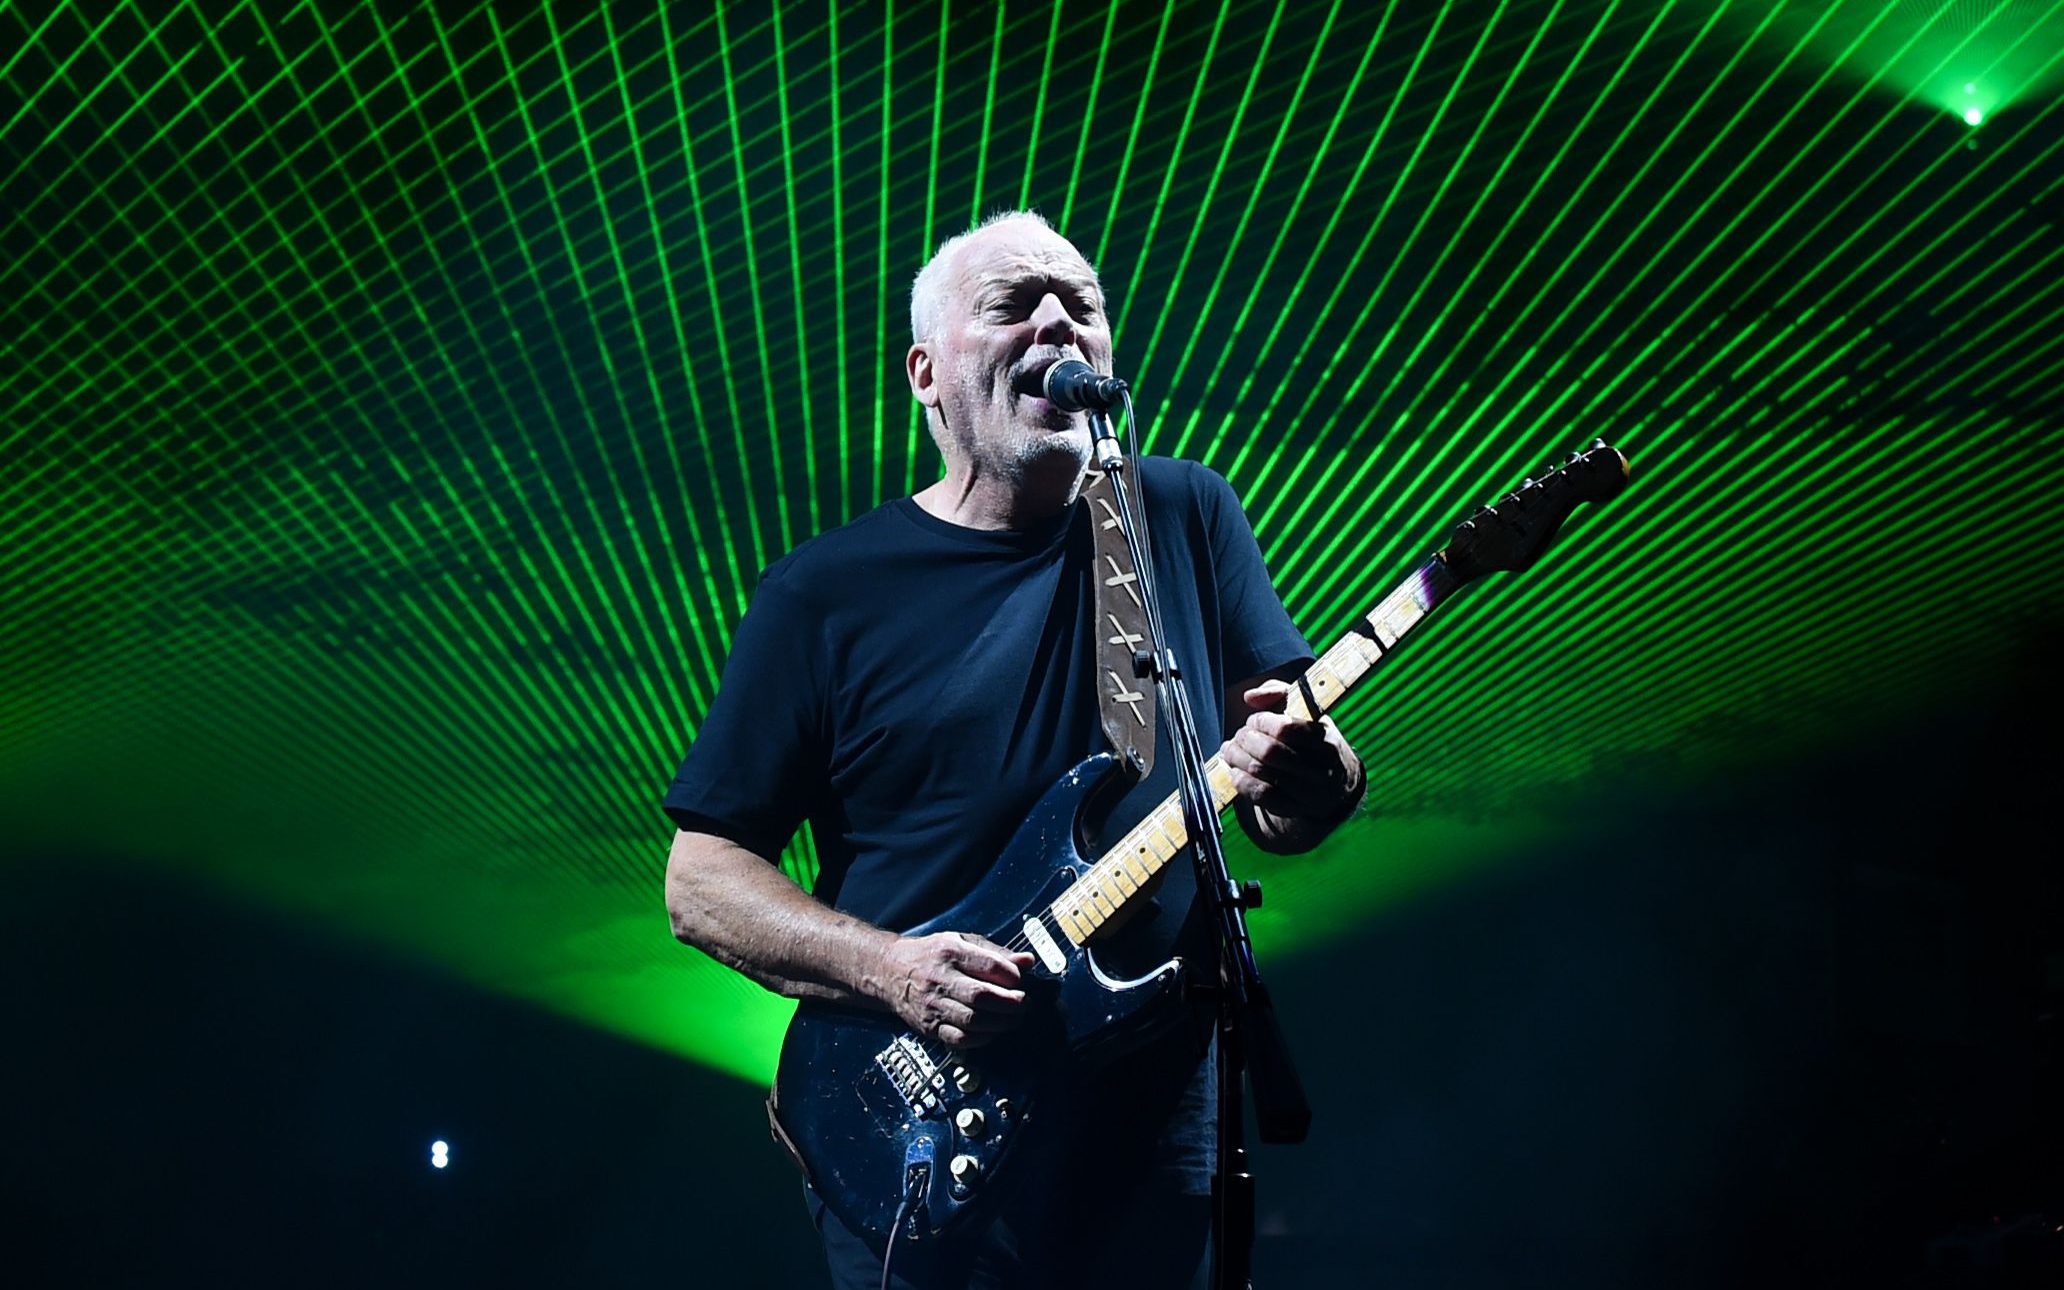 David Gilmour: Μια ακόμη συναυλία στο Λος Άντζελες λόγω αυξημένης ζήτησης